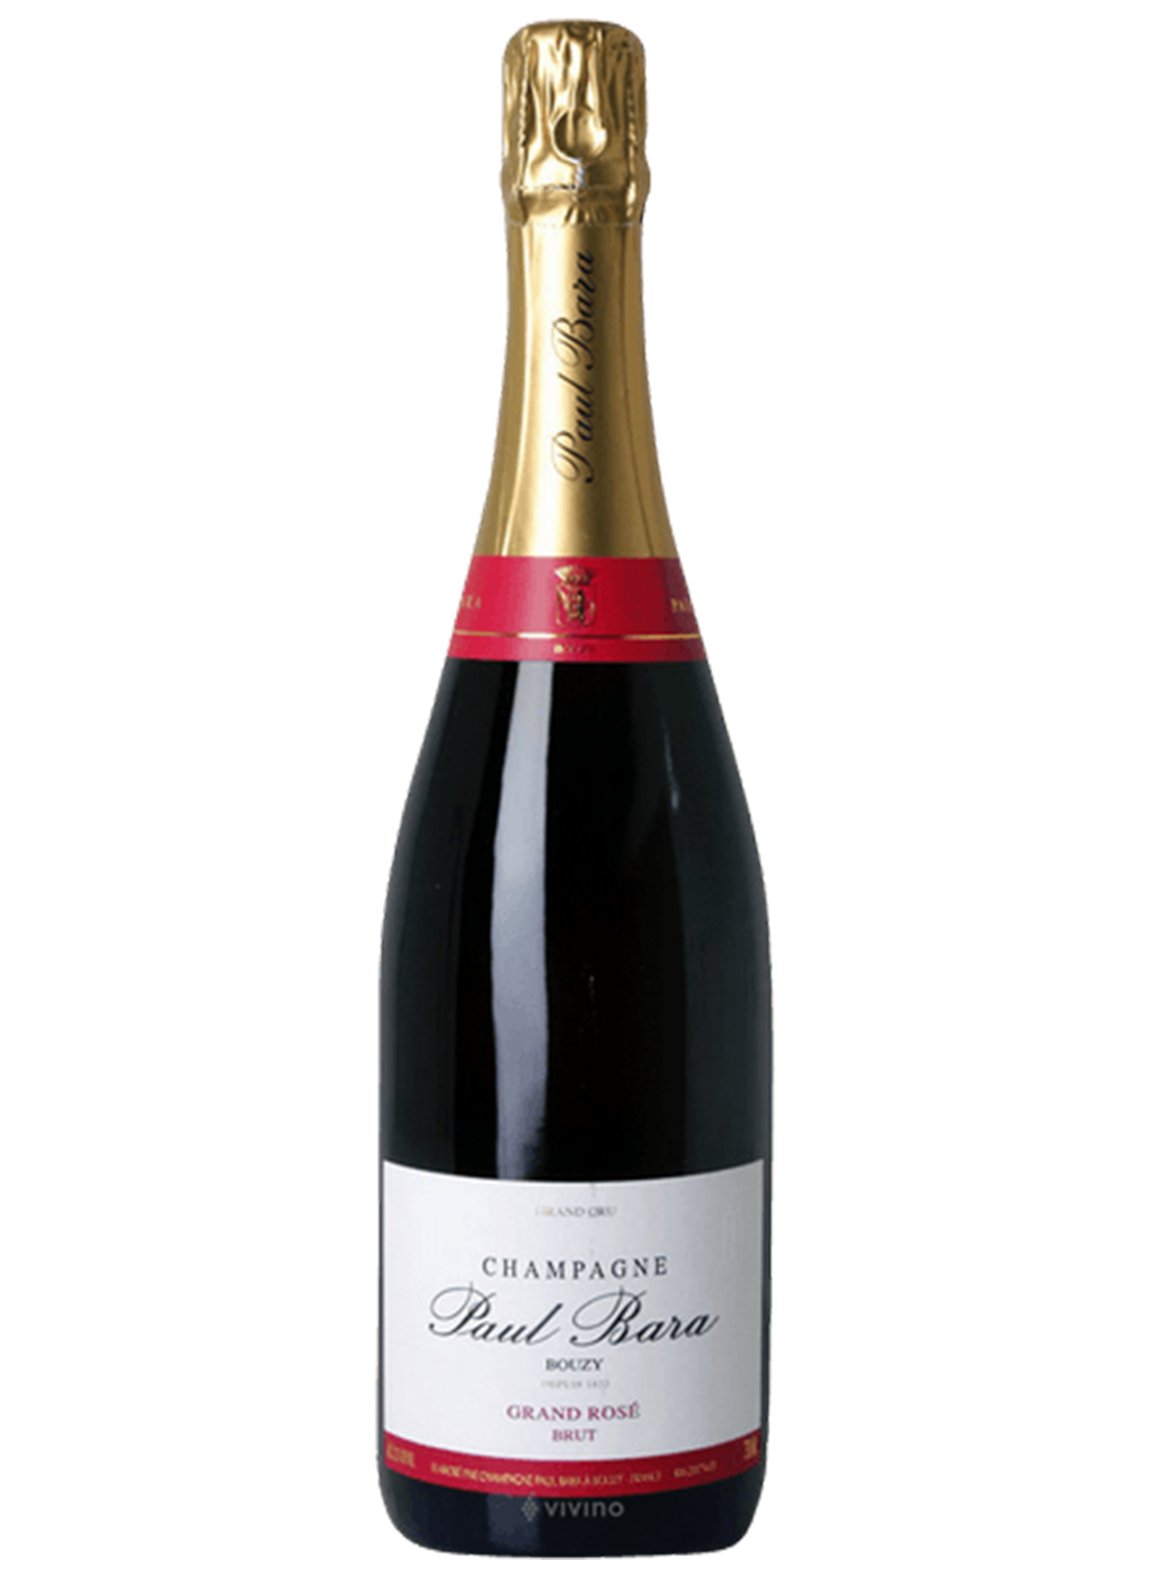 Paul Bara Grand Rose de Bouzy NV - Wine France Champagne - Liquor Wine Cave